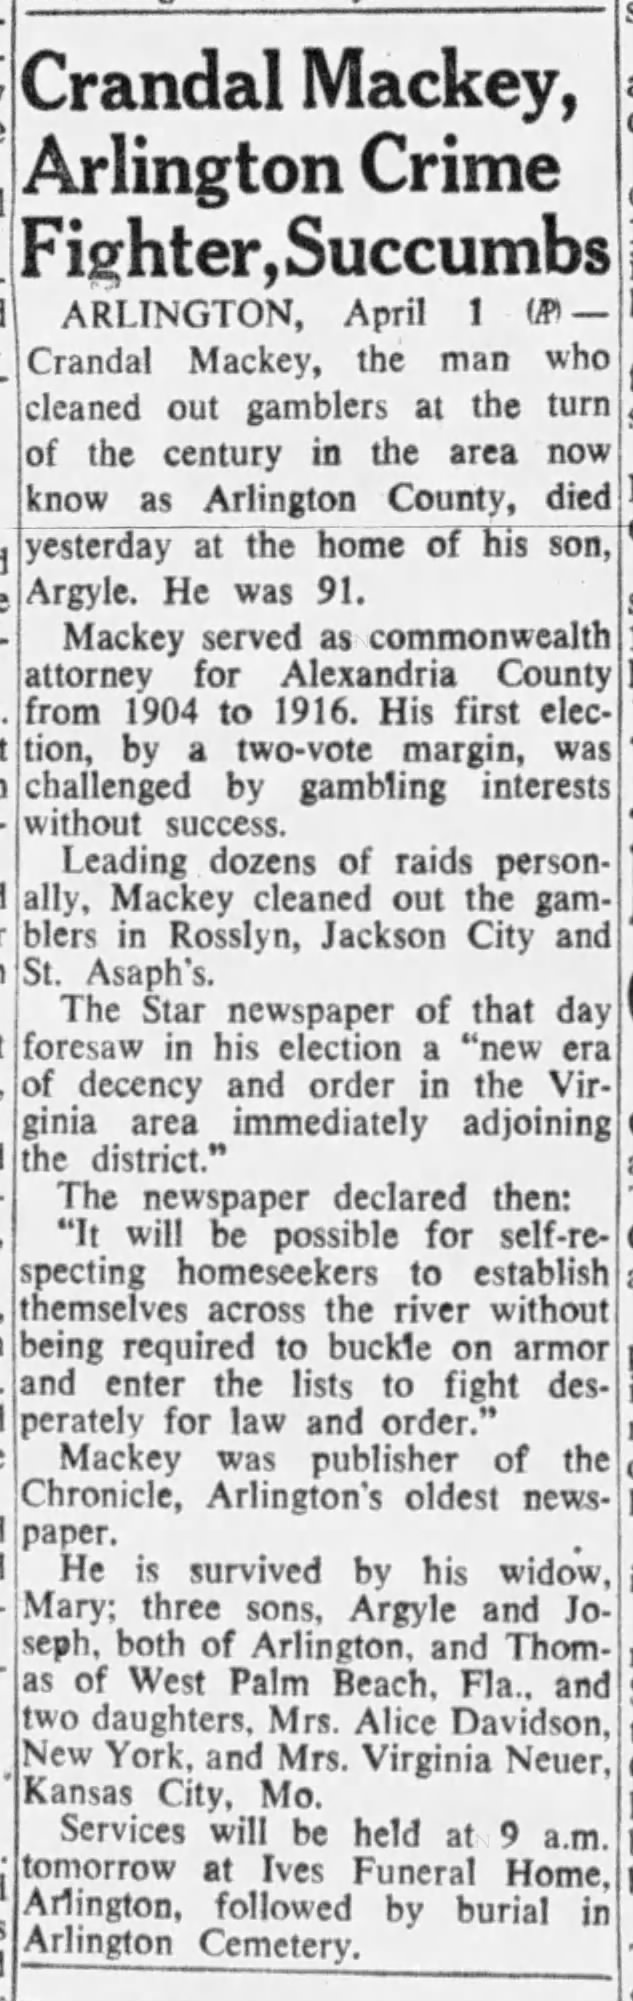 Crandal Mackey, Arlington Crime Fighter, Succumbs; 2 Apr 1957; Daily Press; 20